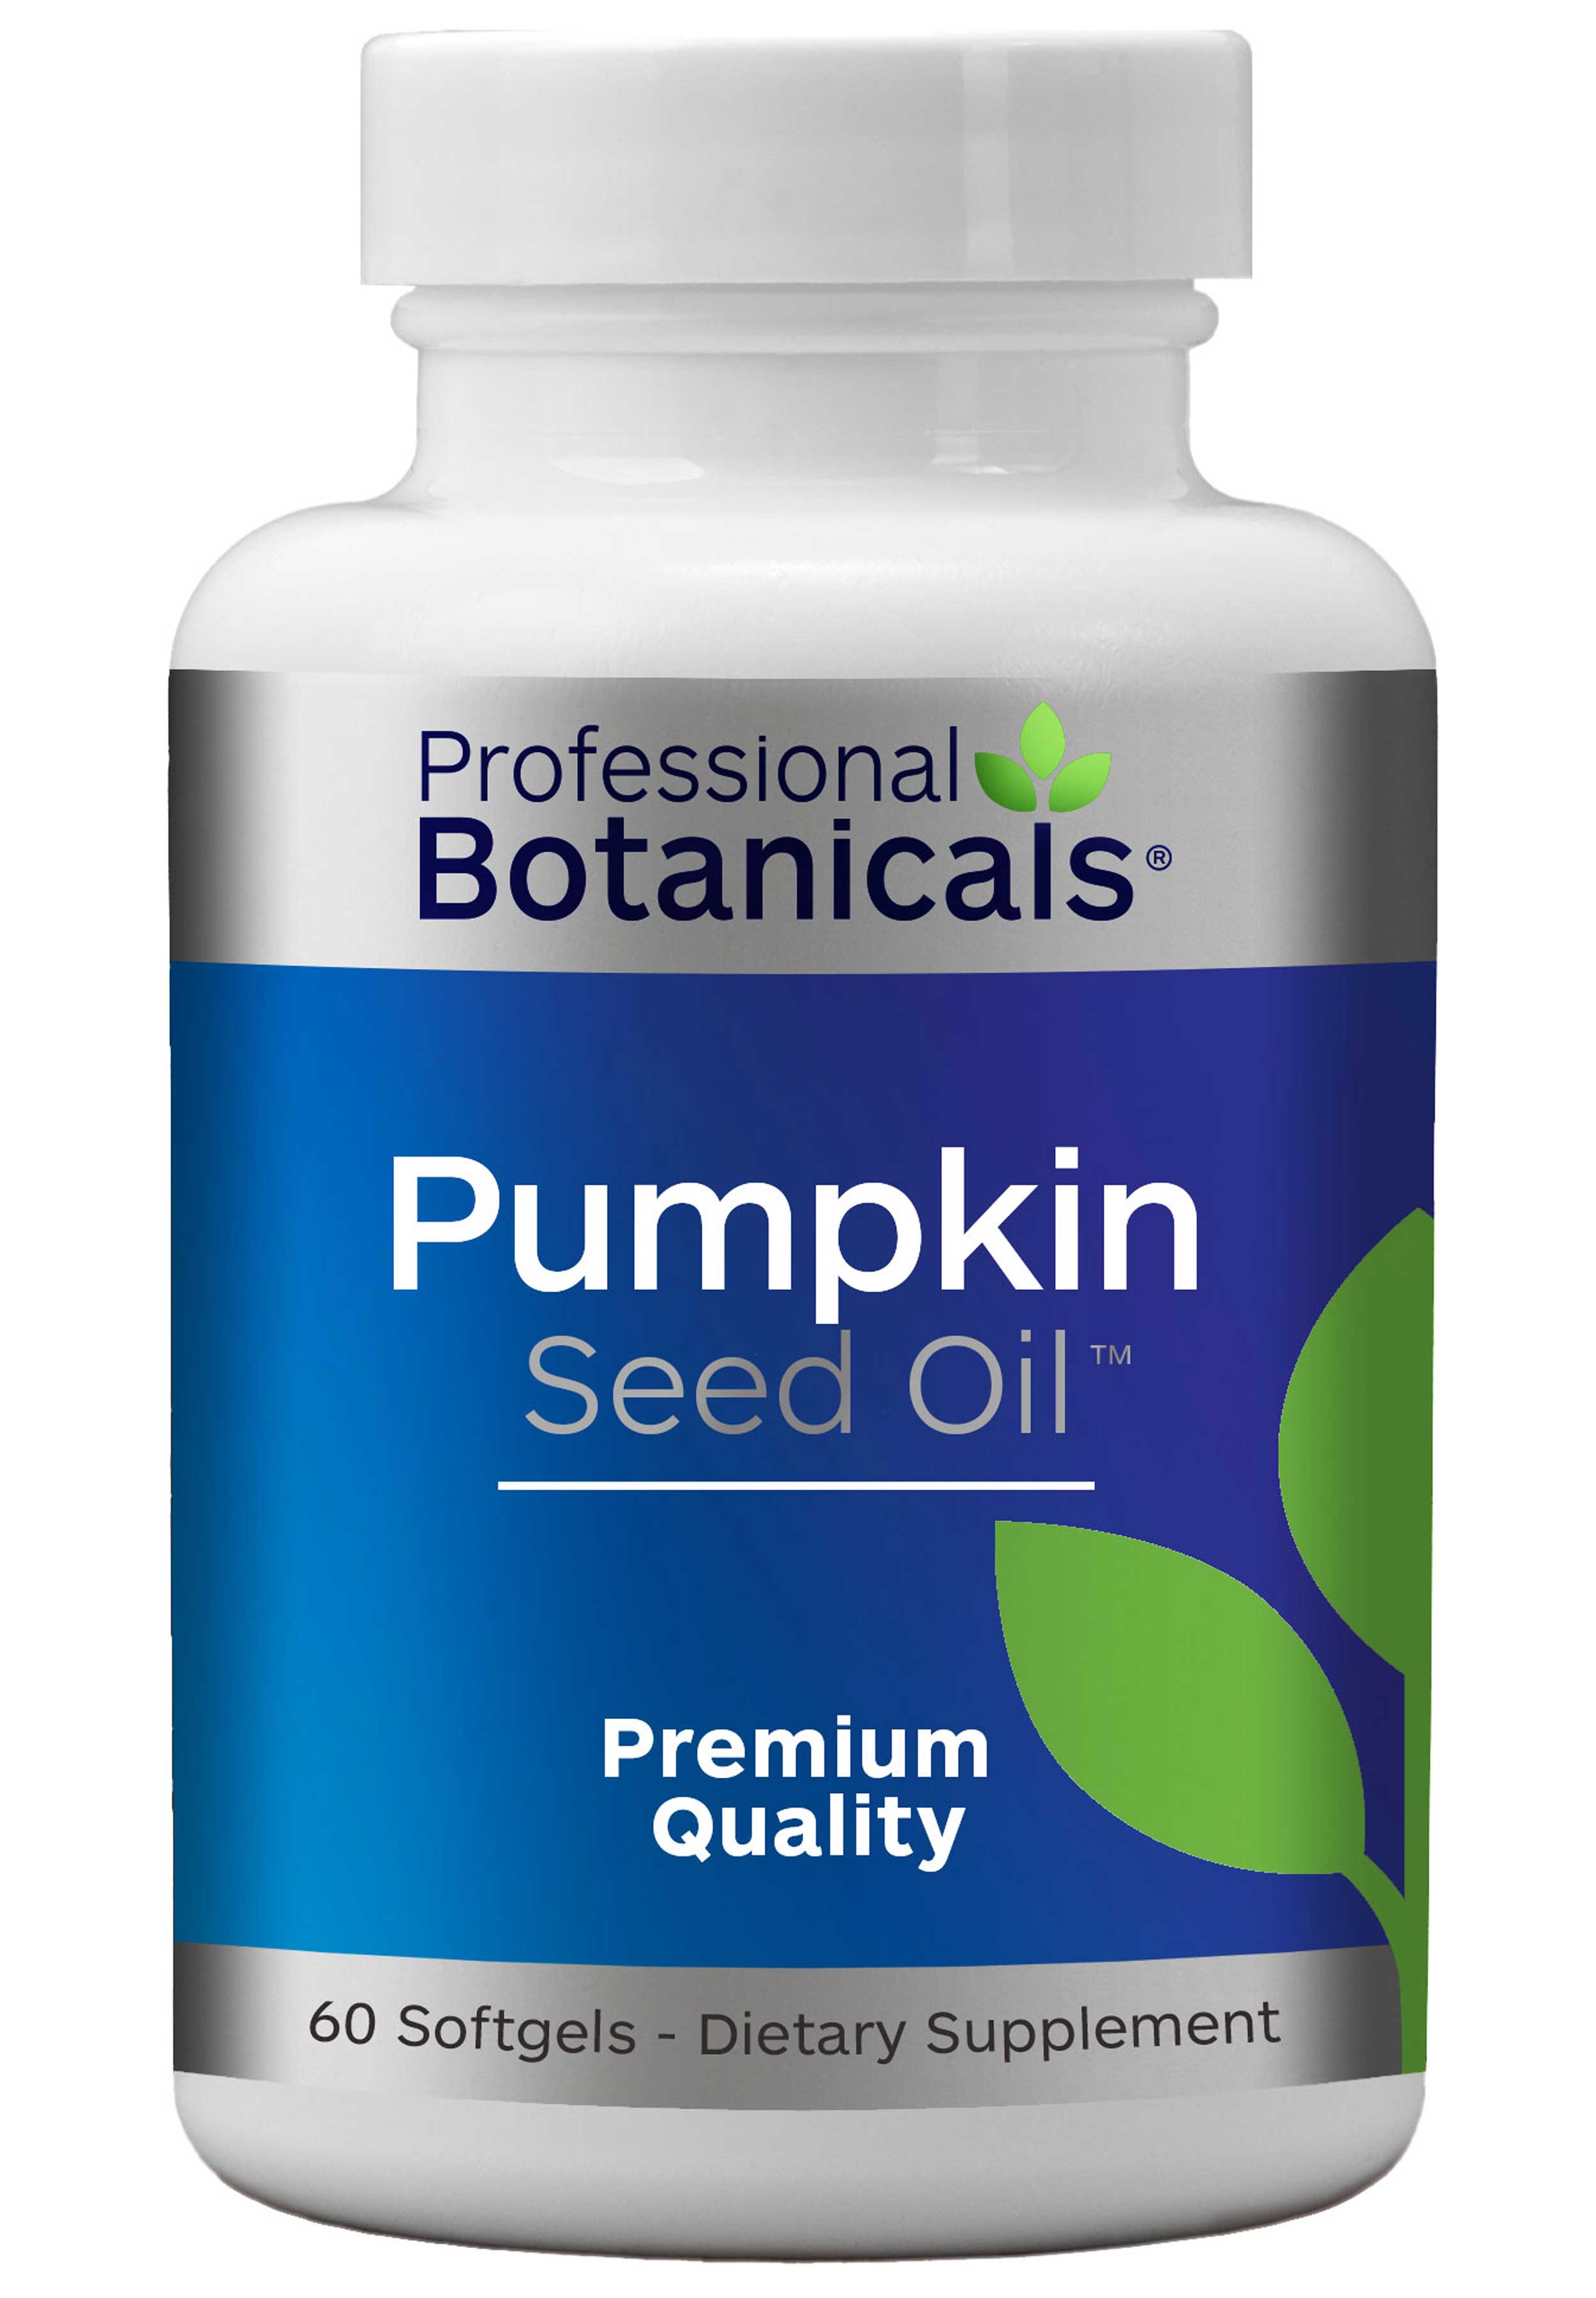  Professional Botanicals Pumpkin Seed Oil